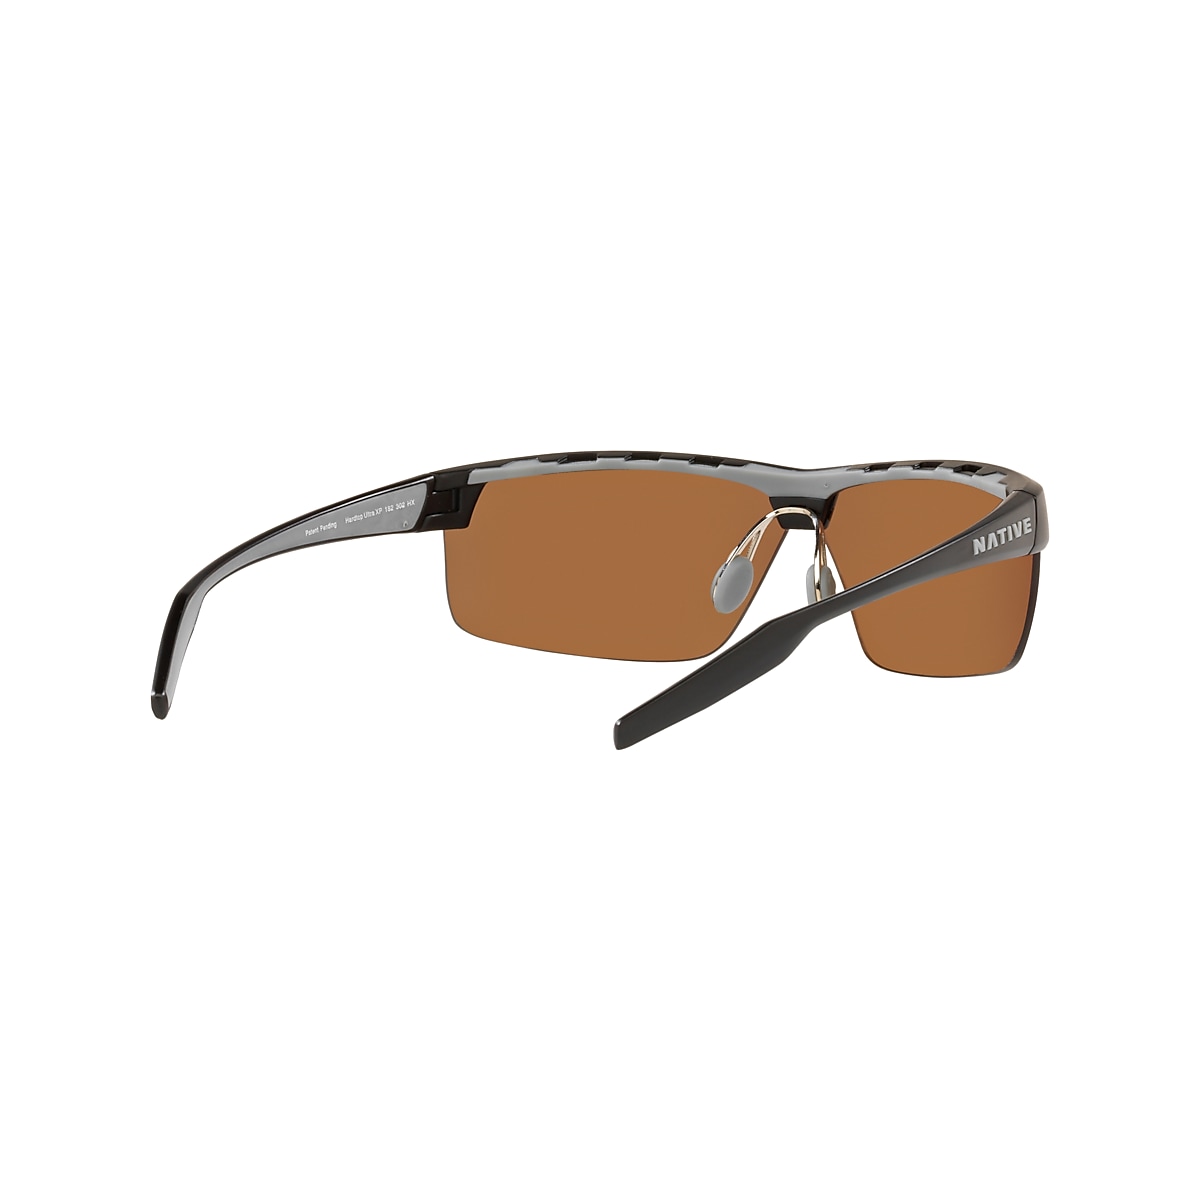 Hardtop Ultra XP Sunglasses in Violet Reflex | Native Eyewear®